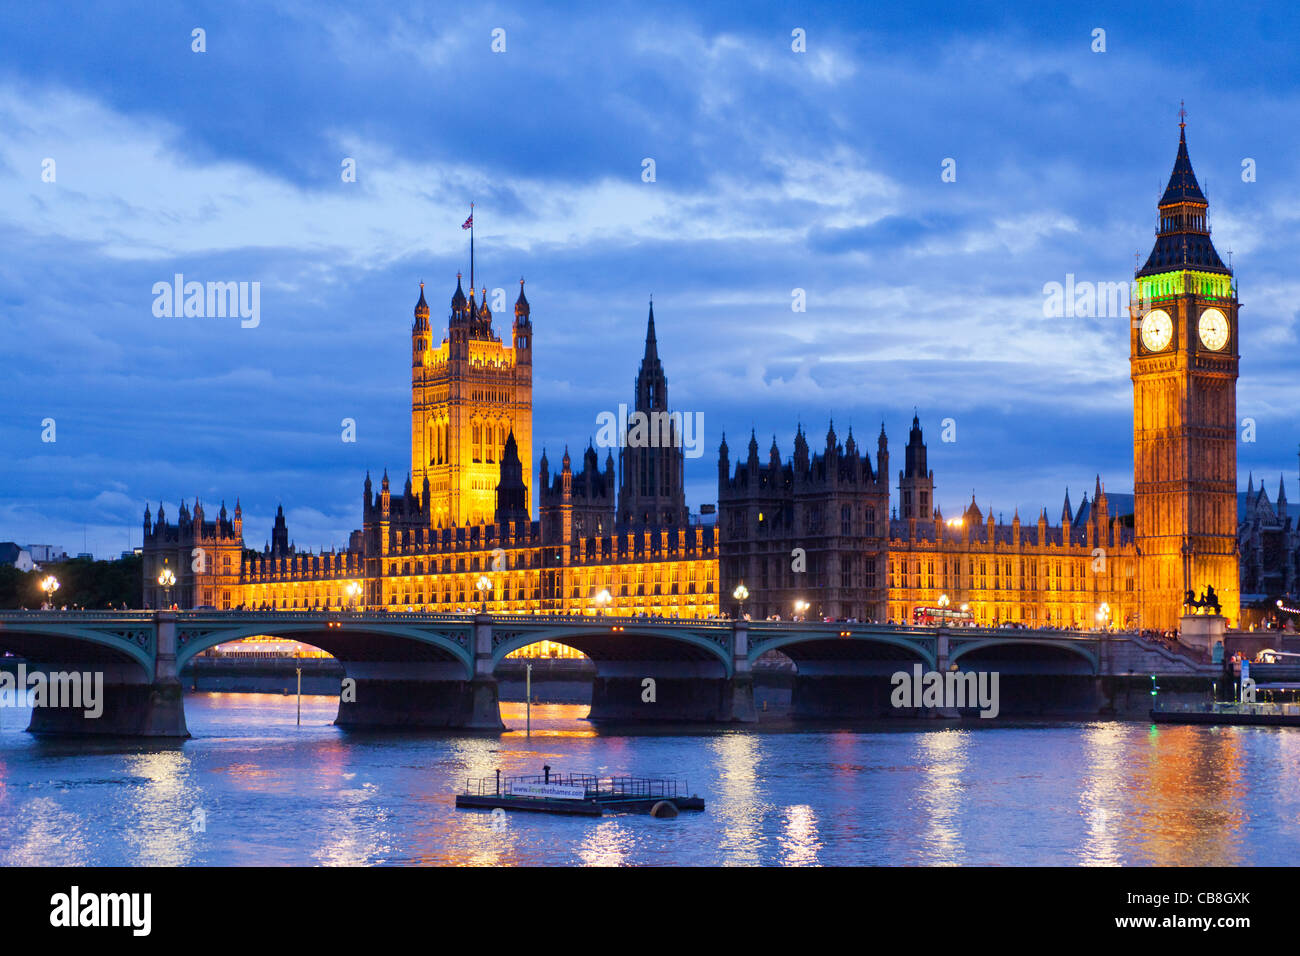 An evening image of London's Parliament and Big Ben. Stock Photo